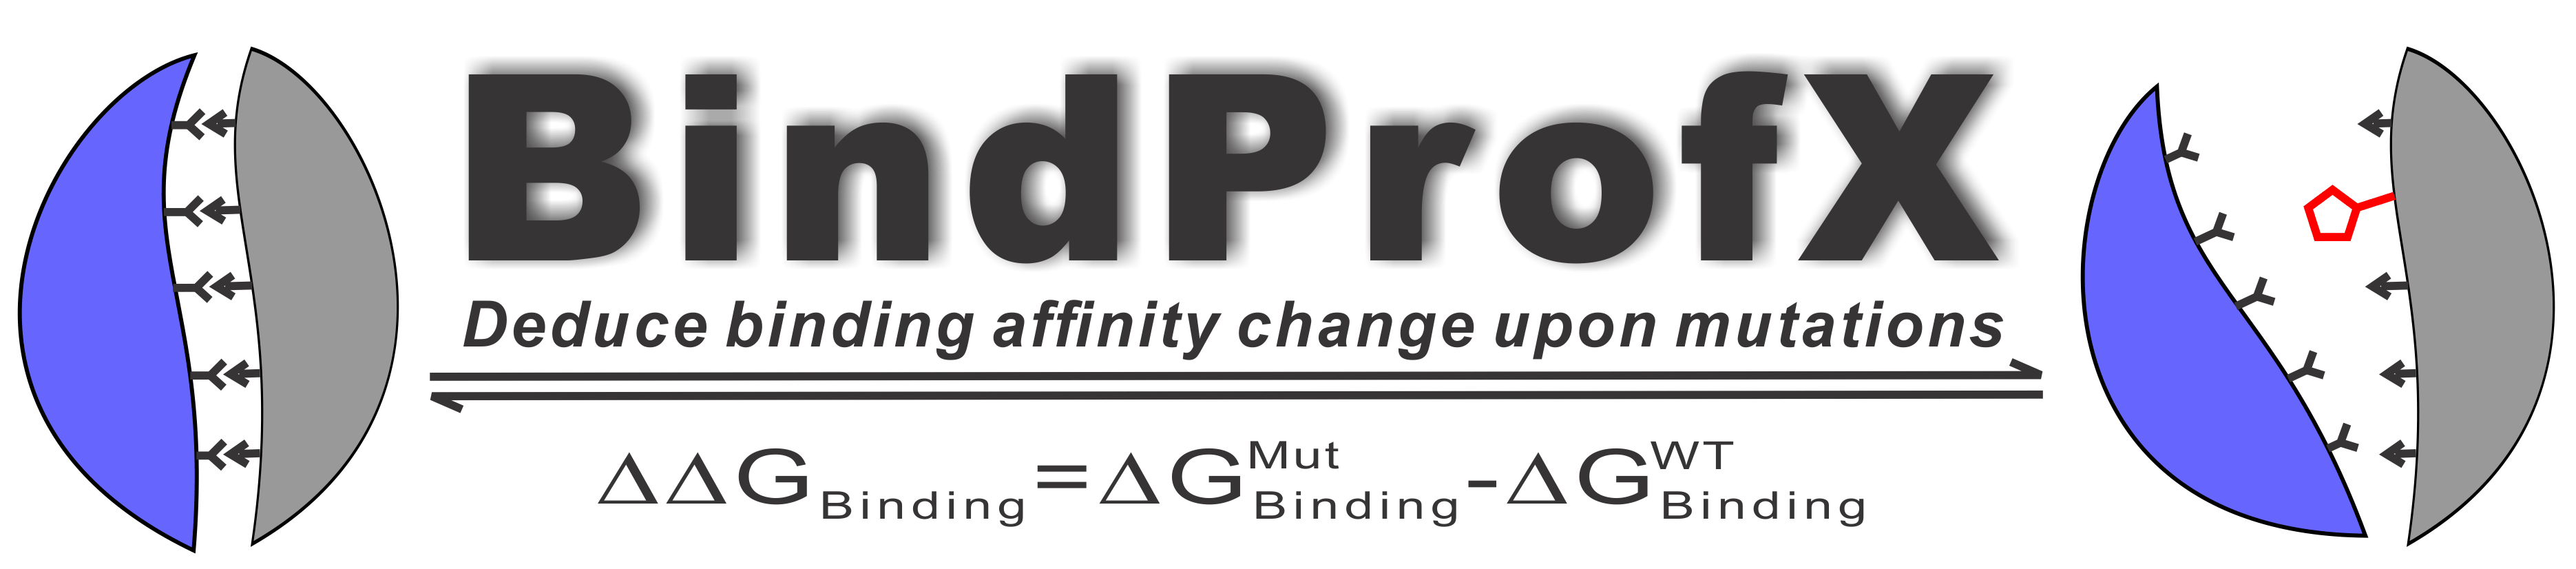 BindProfX logo